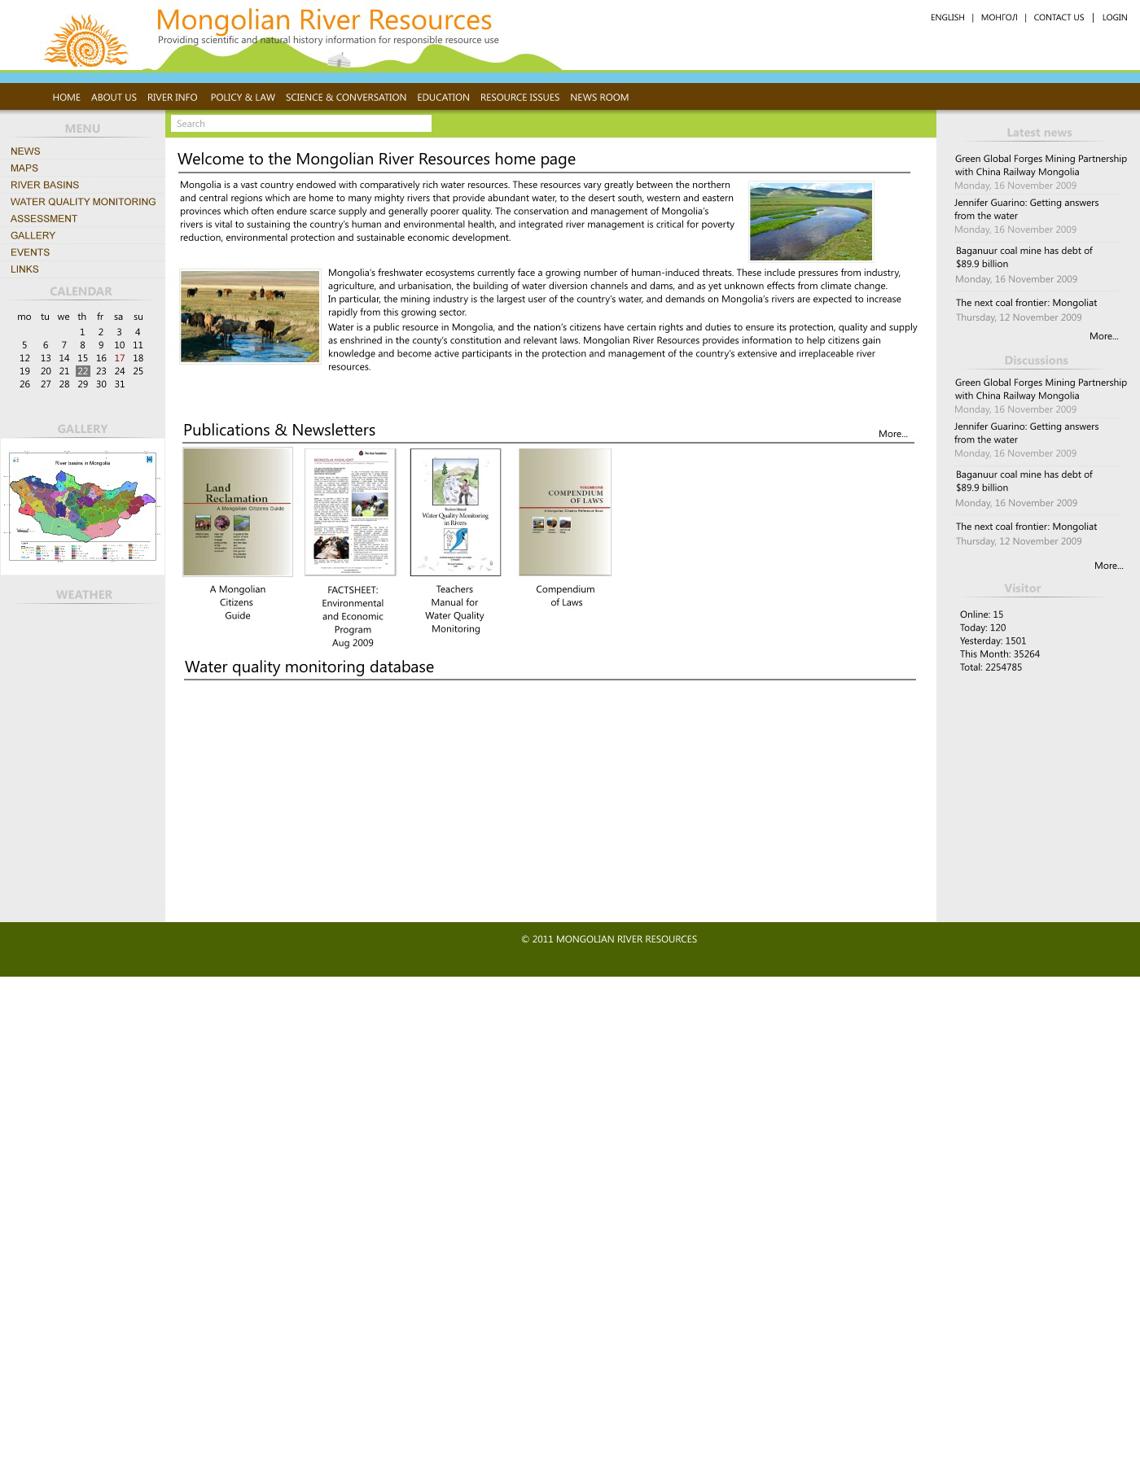 Mongolian River resources website